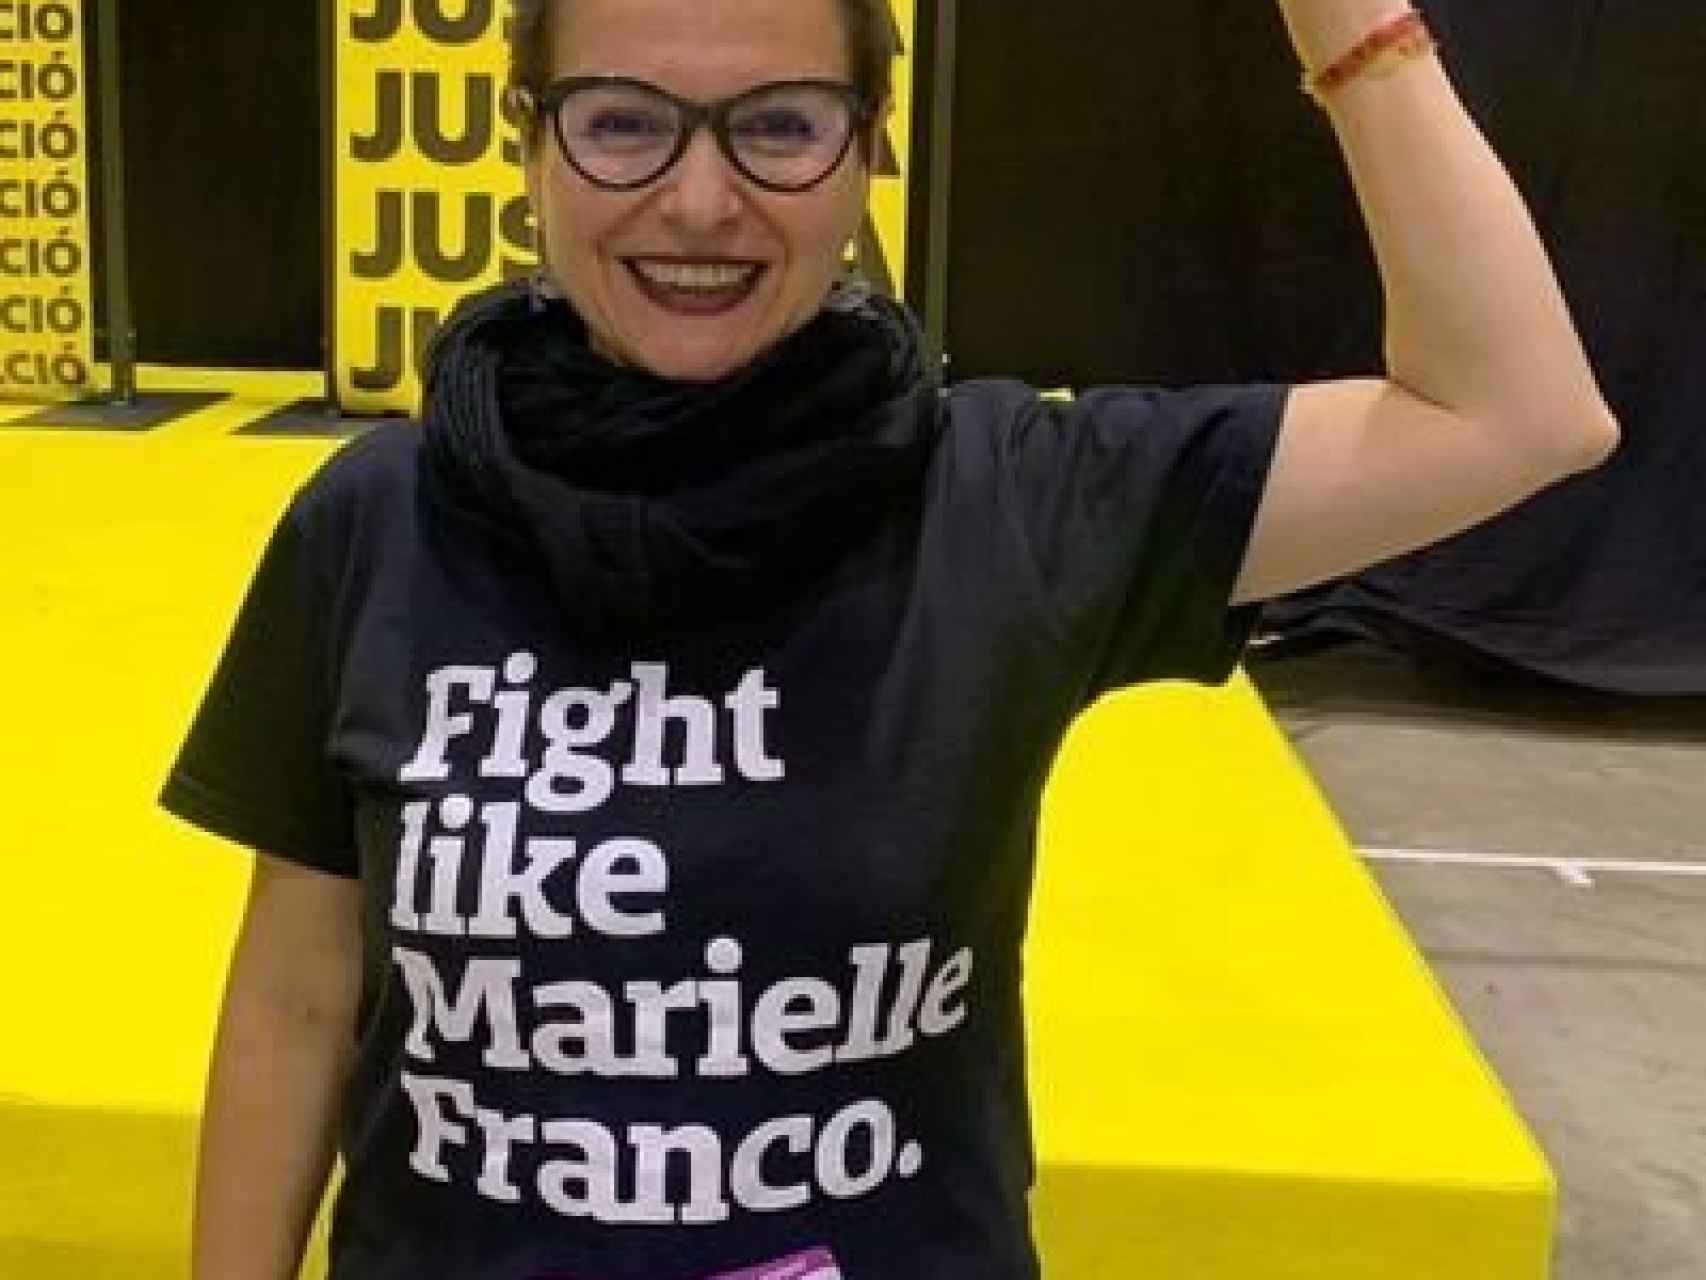 Camiseta en homenaje a Marielle Franco, la activista brasileña asesinada en 2018